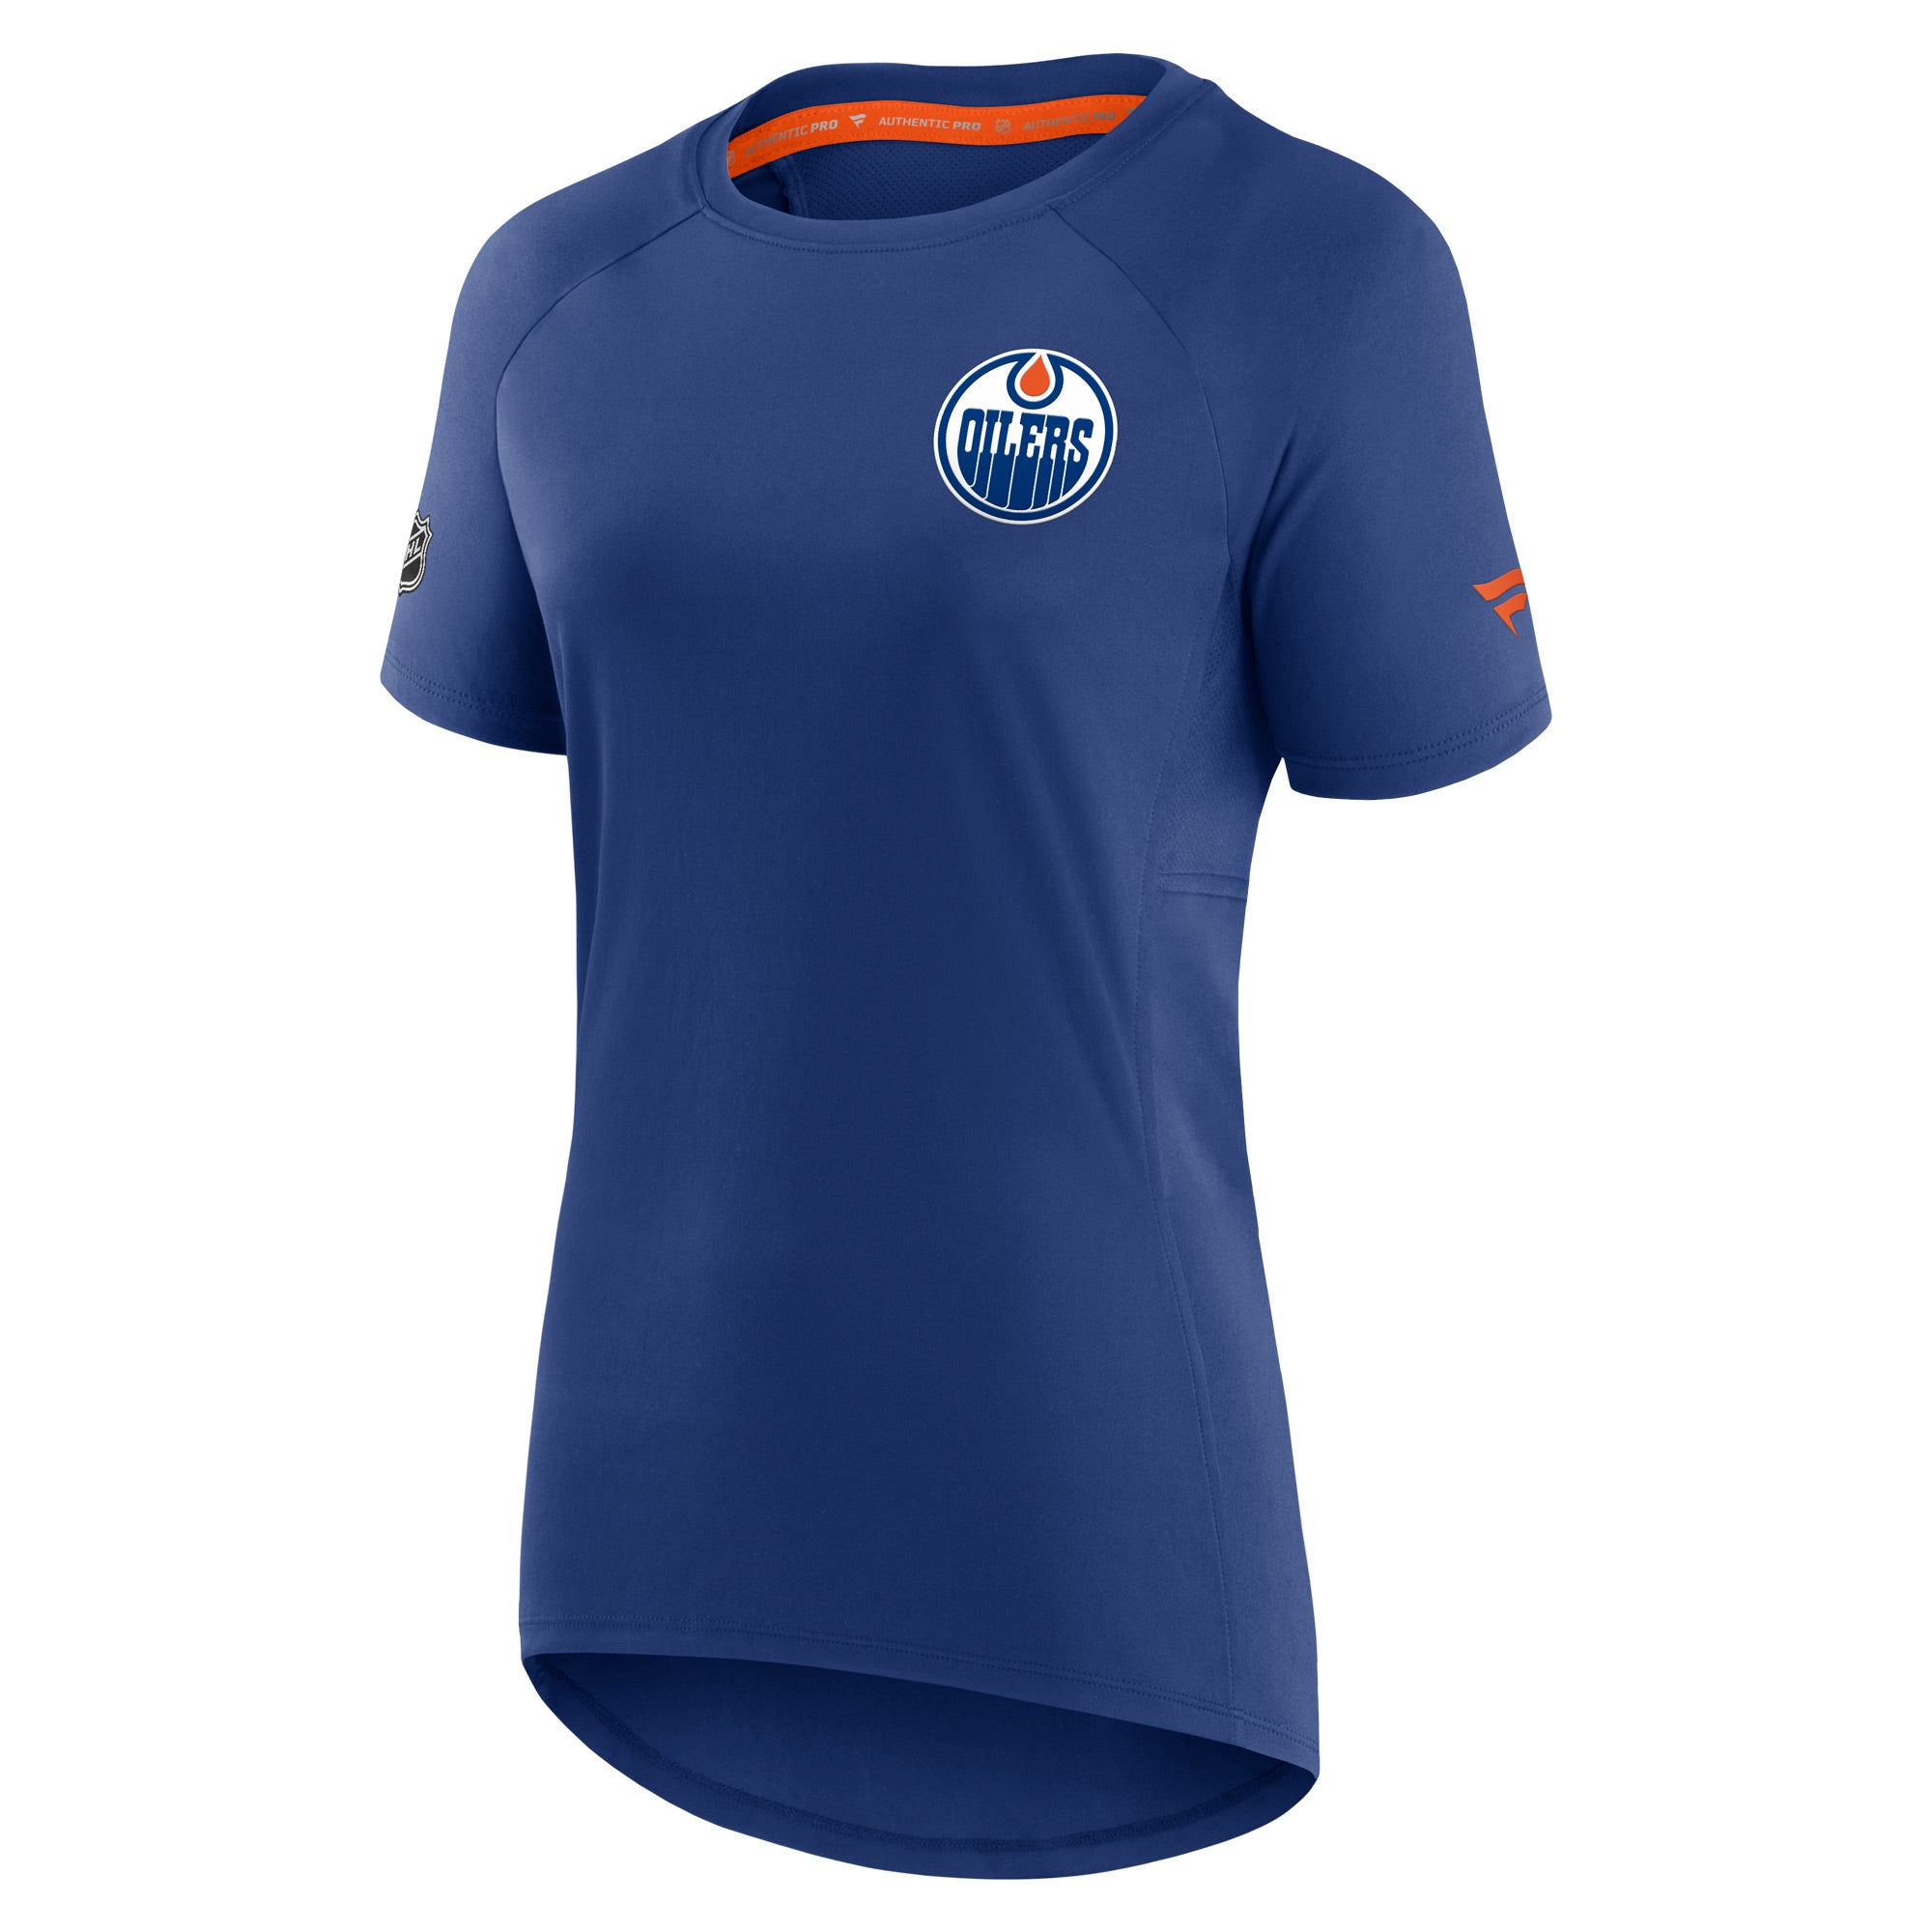 Edmonton Oilers women's jersey